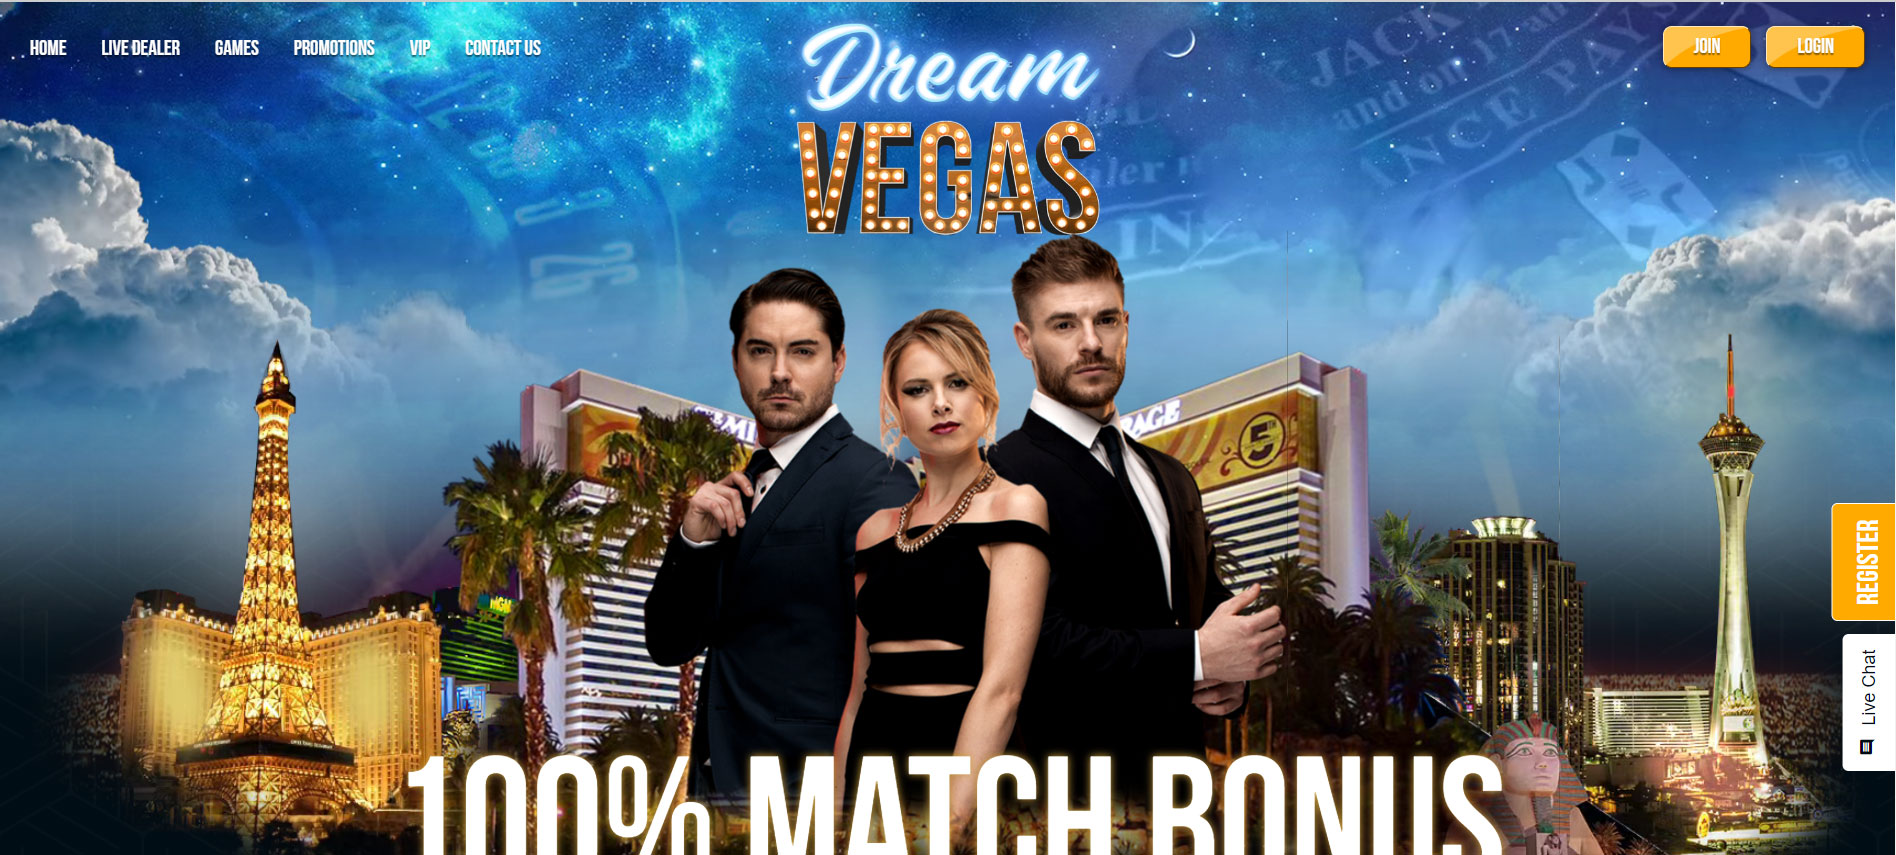 Dream Vegas Casino Home Screen